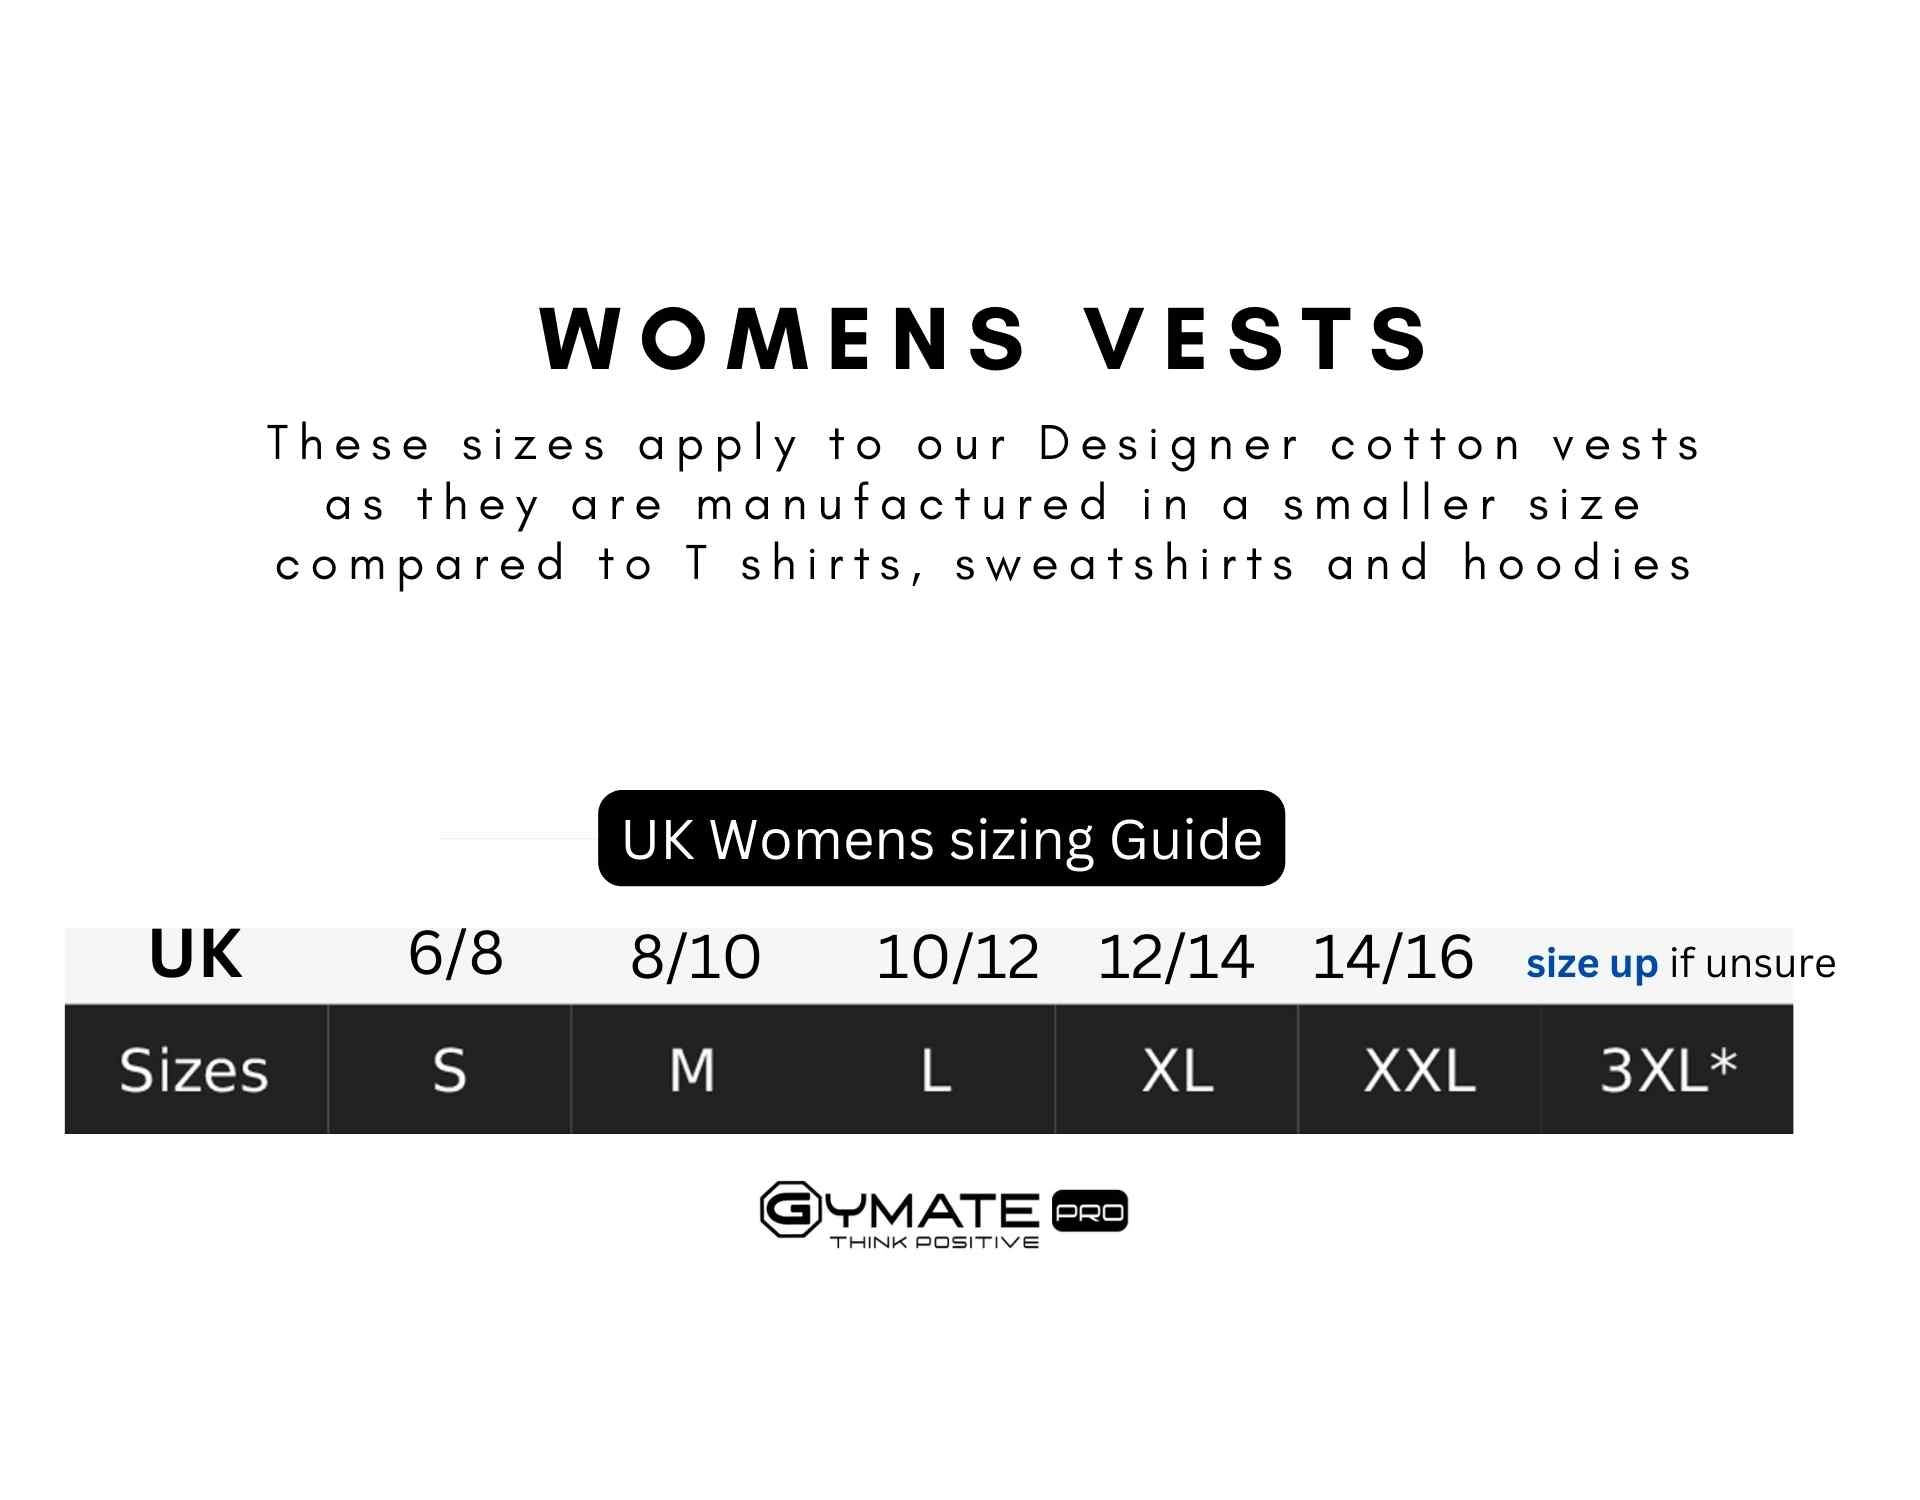 Stylish Vest Top for Women Activewear / Athleisure Killin It logo size chart